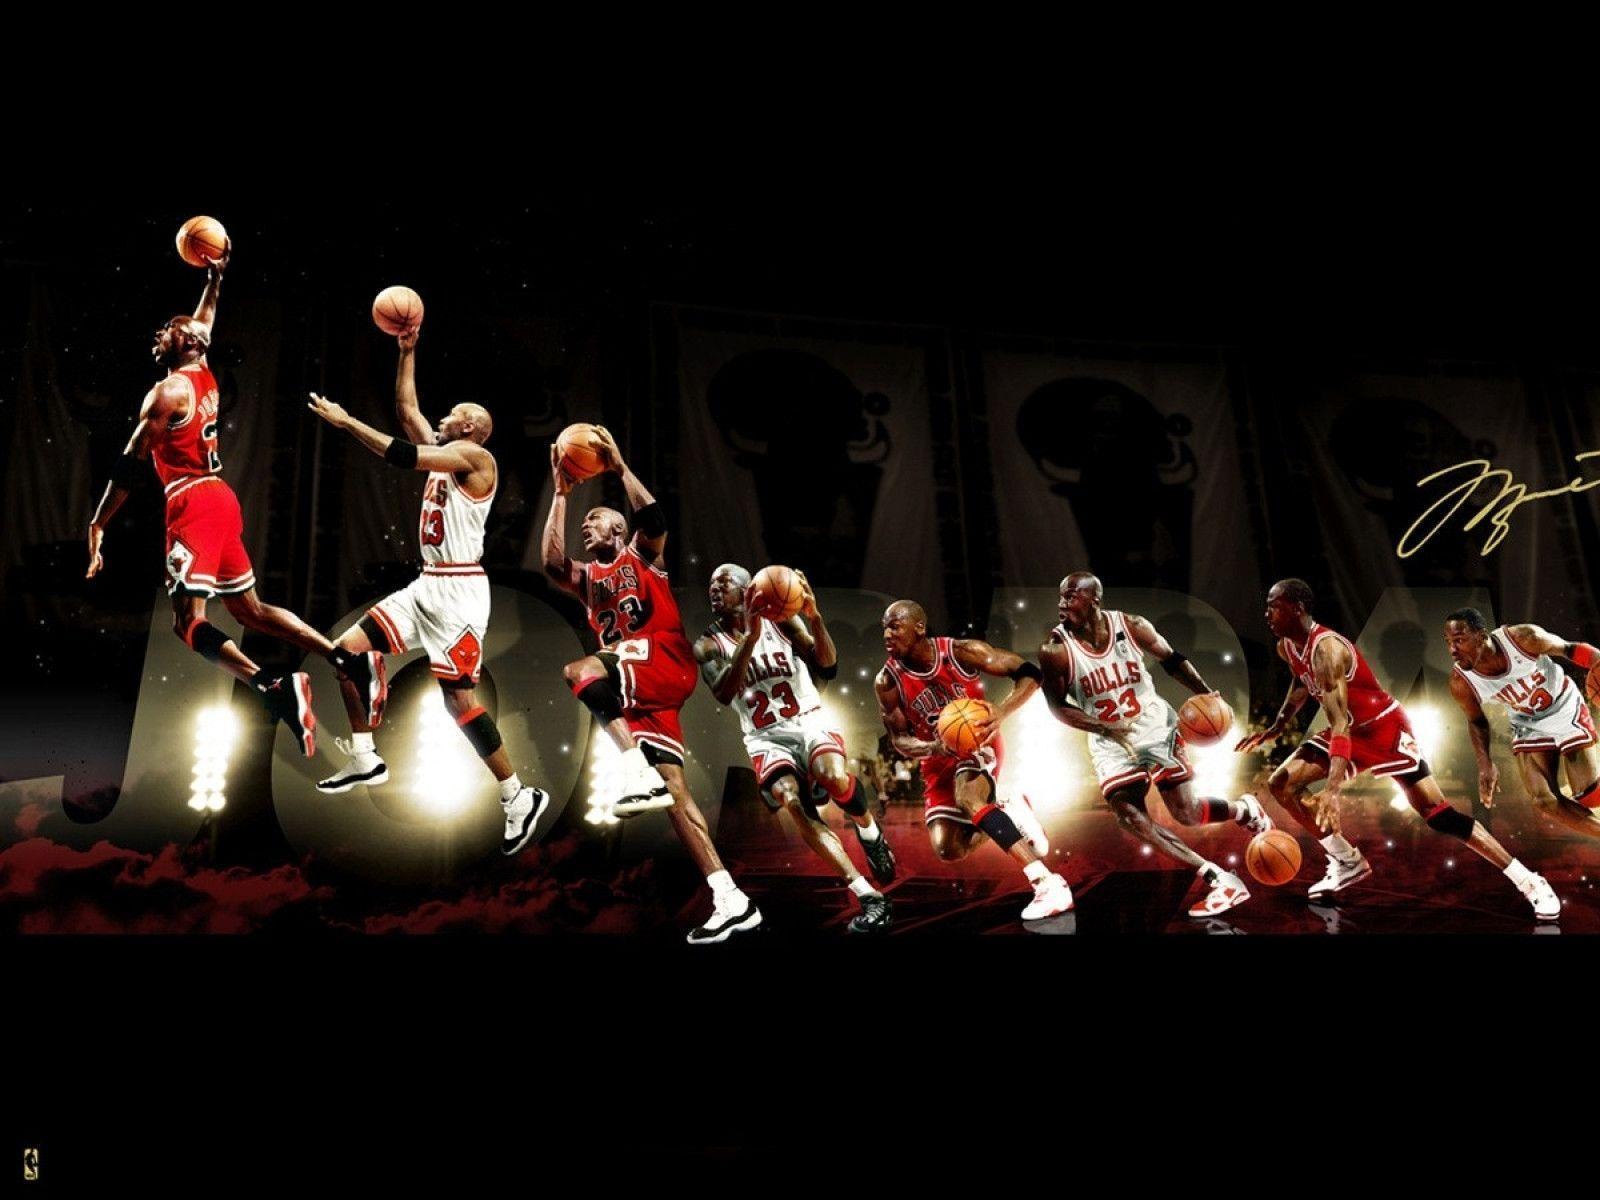 Chicago Bulls Jordan 24 99826 Image HD Wallpaper. Wallfoy.com